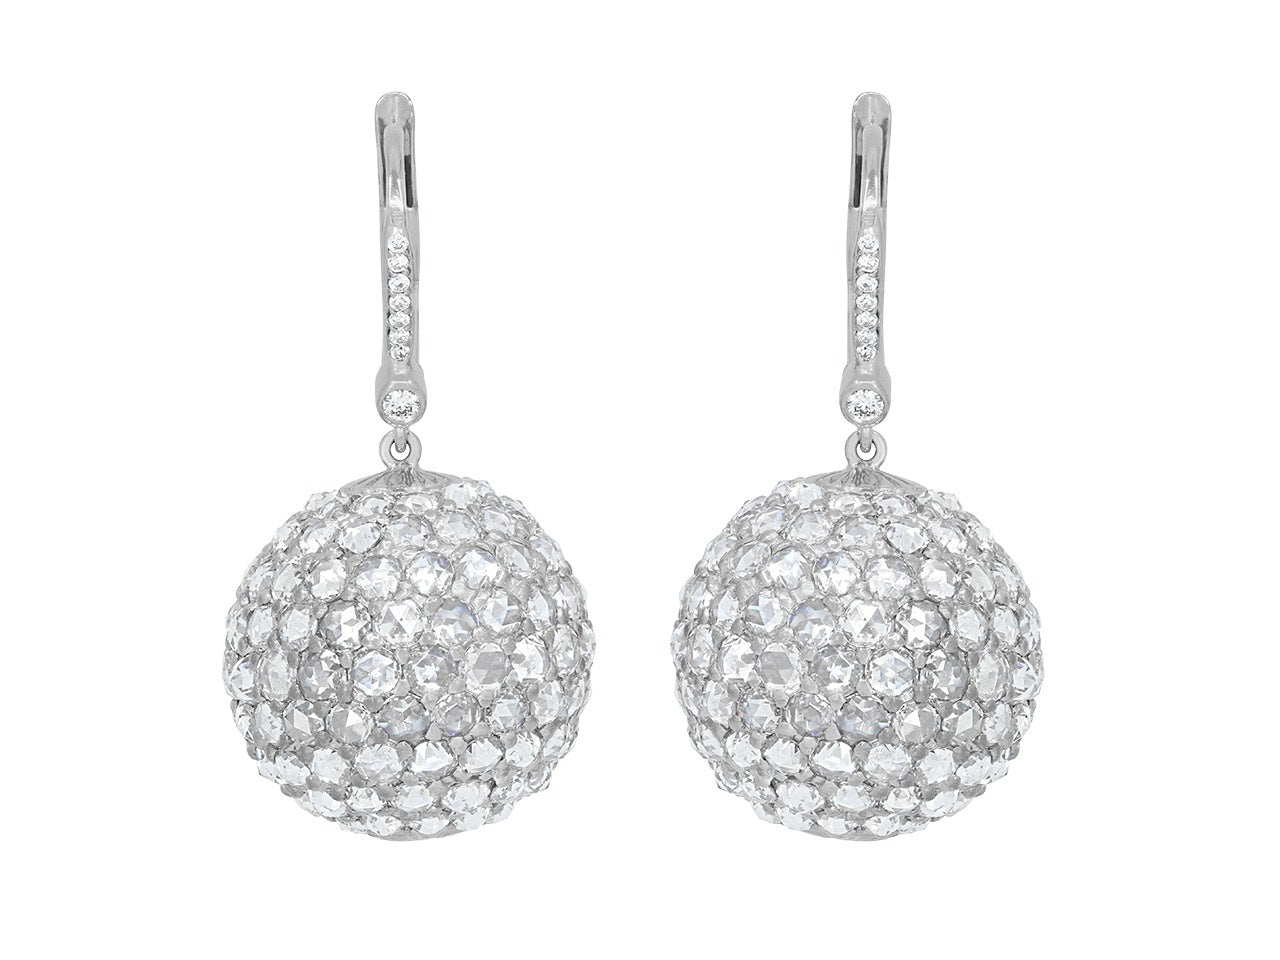 Beladora 'Bespoke' Rose-cut Diamond Ball Earrings in 18K White Gold